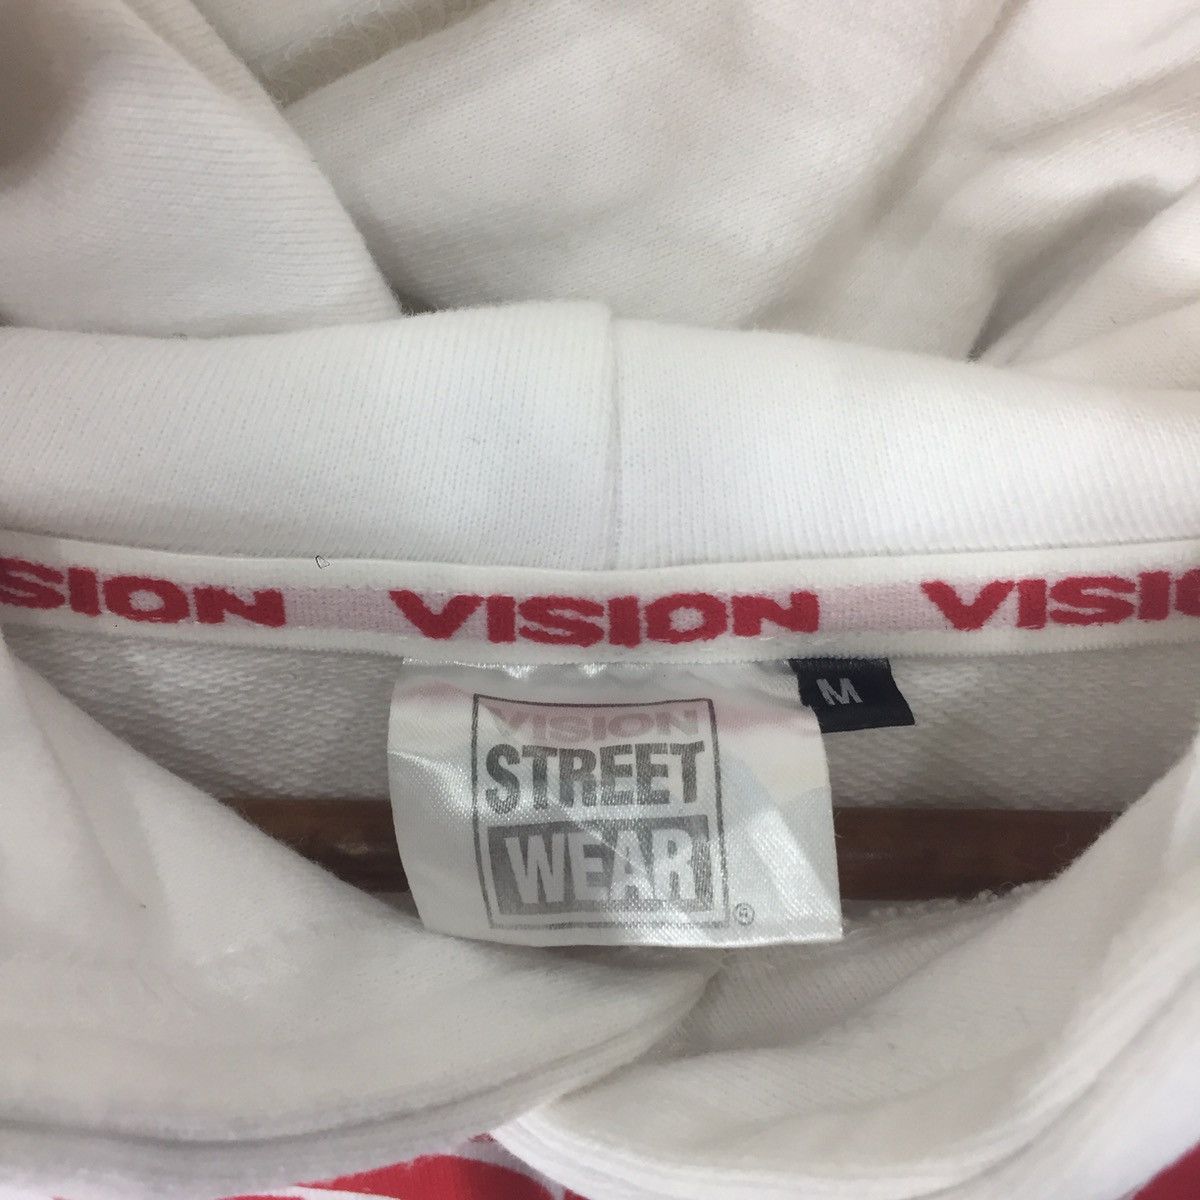 Vision Streetwear Vision Street Wear Hoodie Big Logo Size US S / EU 44-46 / 1 - 7 Thumbnail